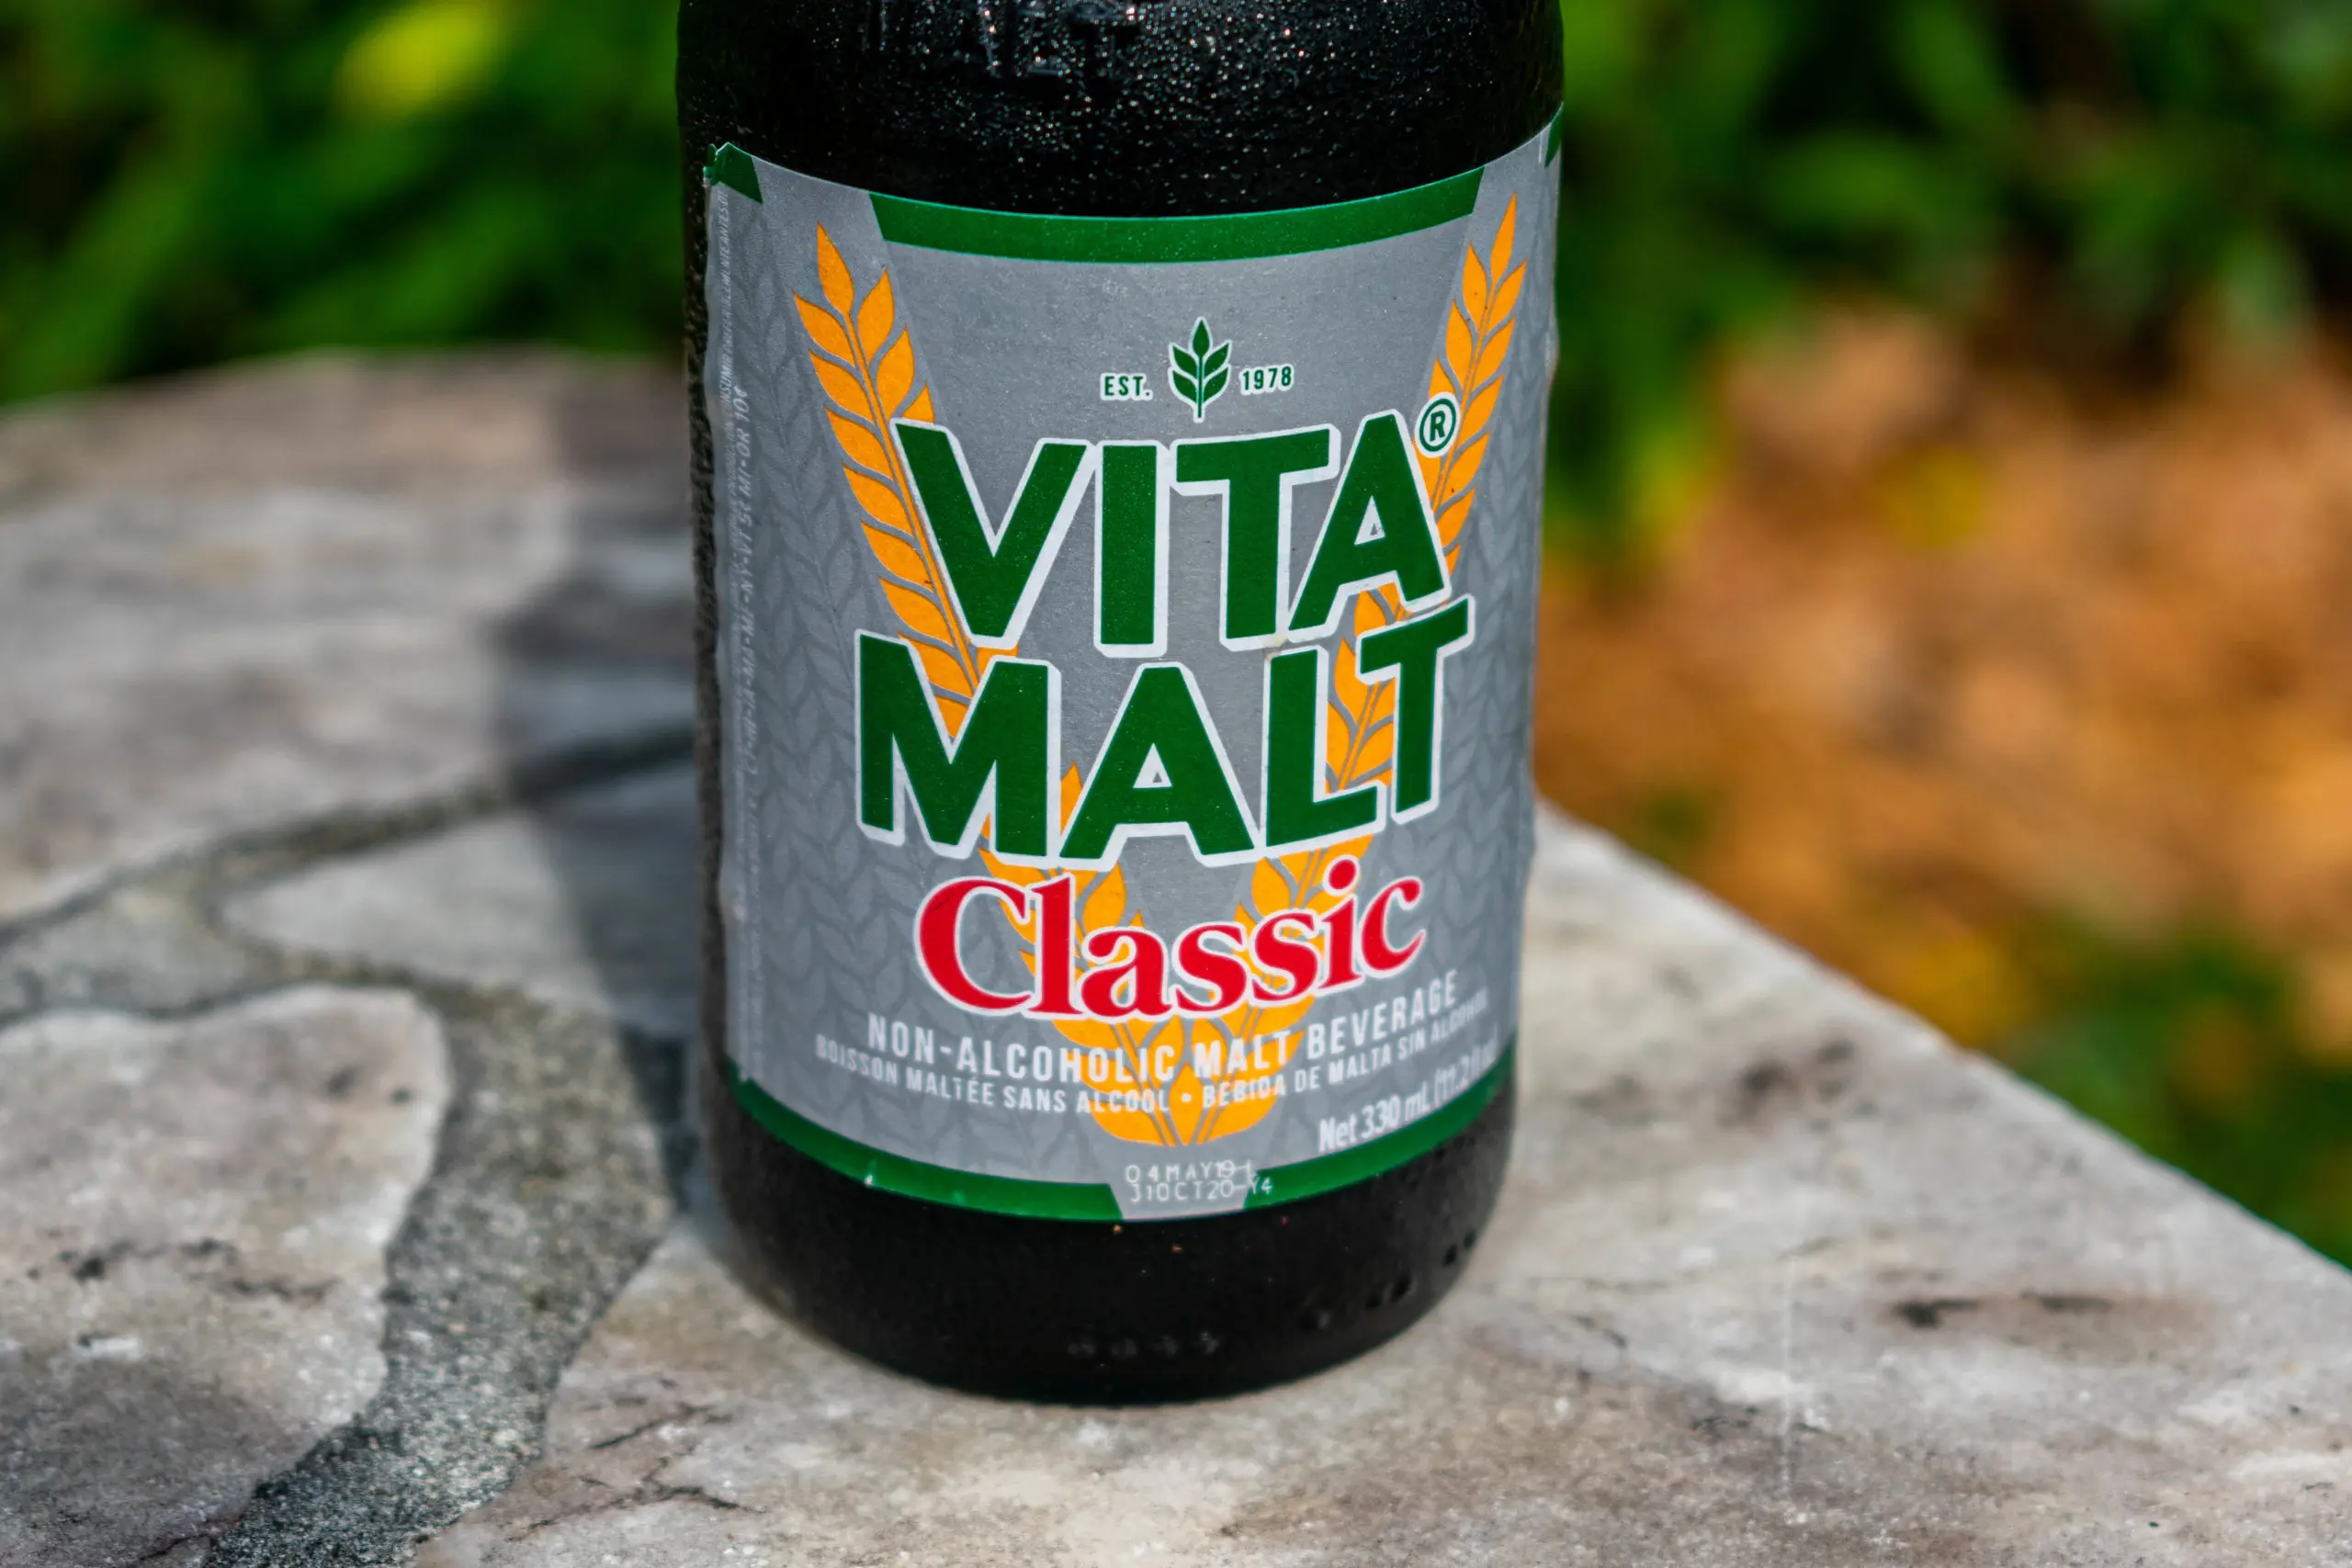 Vita Malta (Drink)